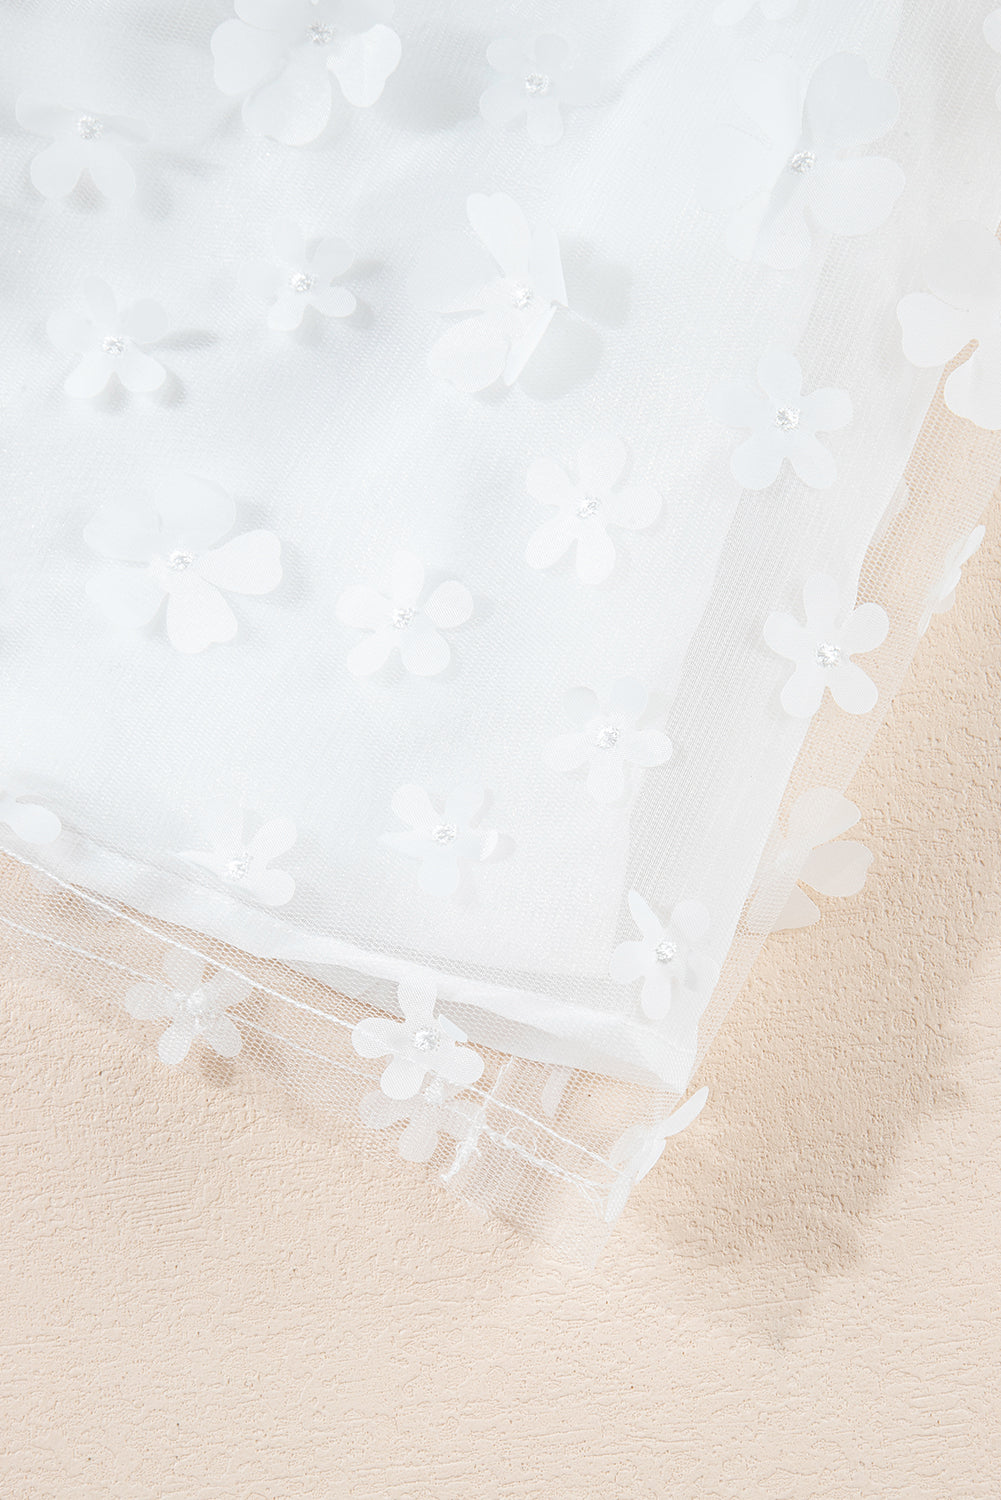 White Flower Applique Elegant Gauze Puffy Bridal Dress